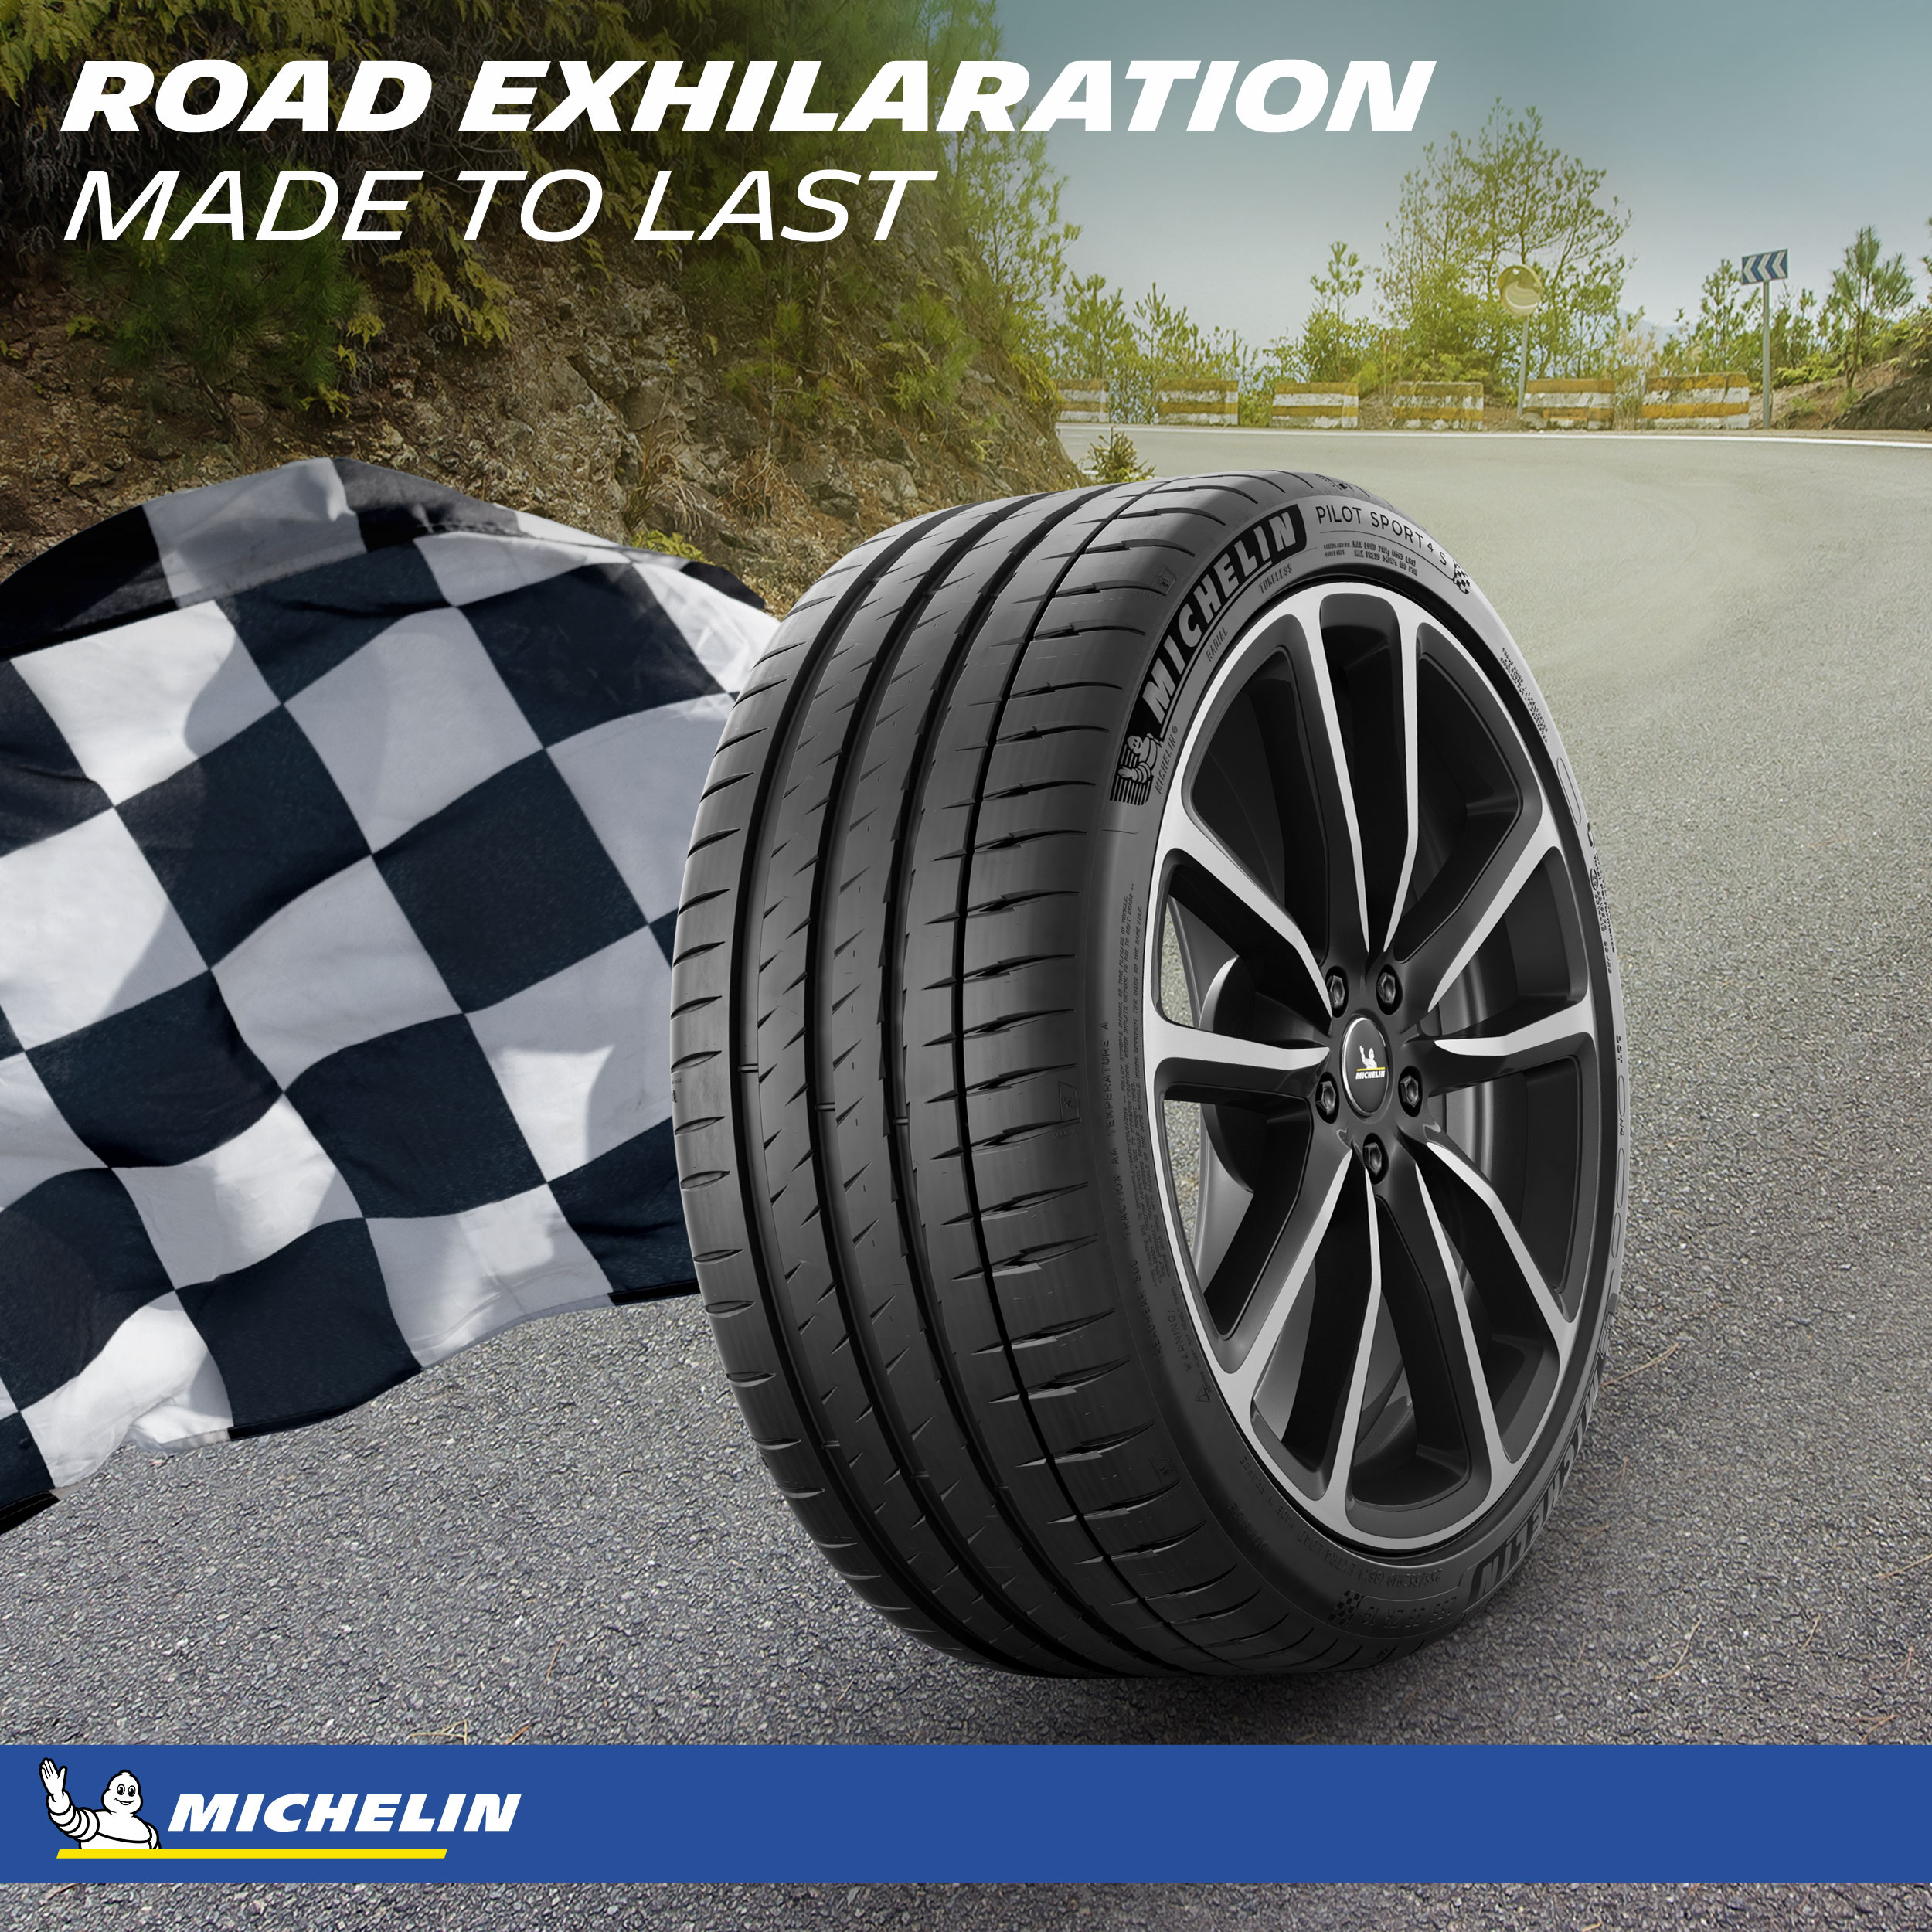 Michelin Pilot Sport 4S Performance 215/45ZR17 (91Y) XL Passenger Tire - image 3 of 5